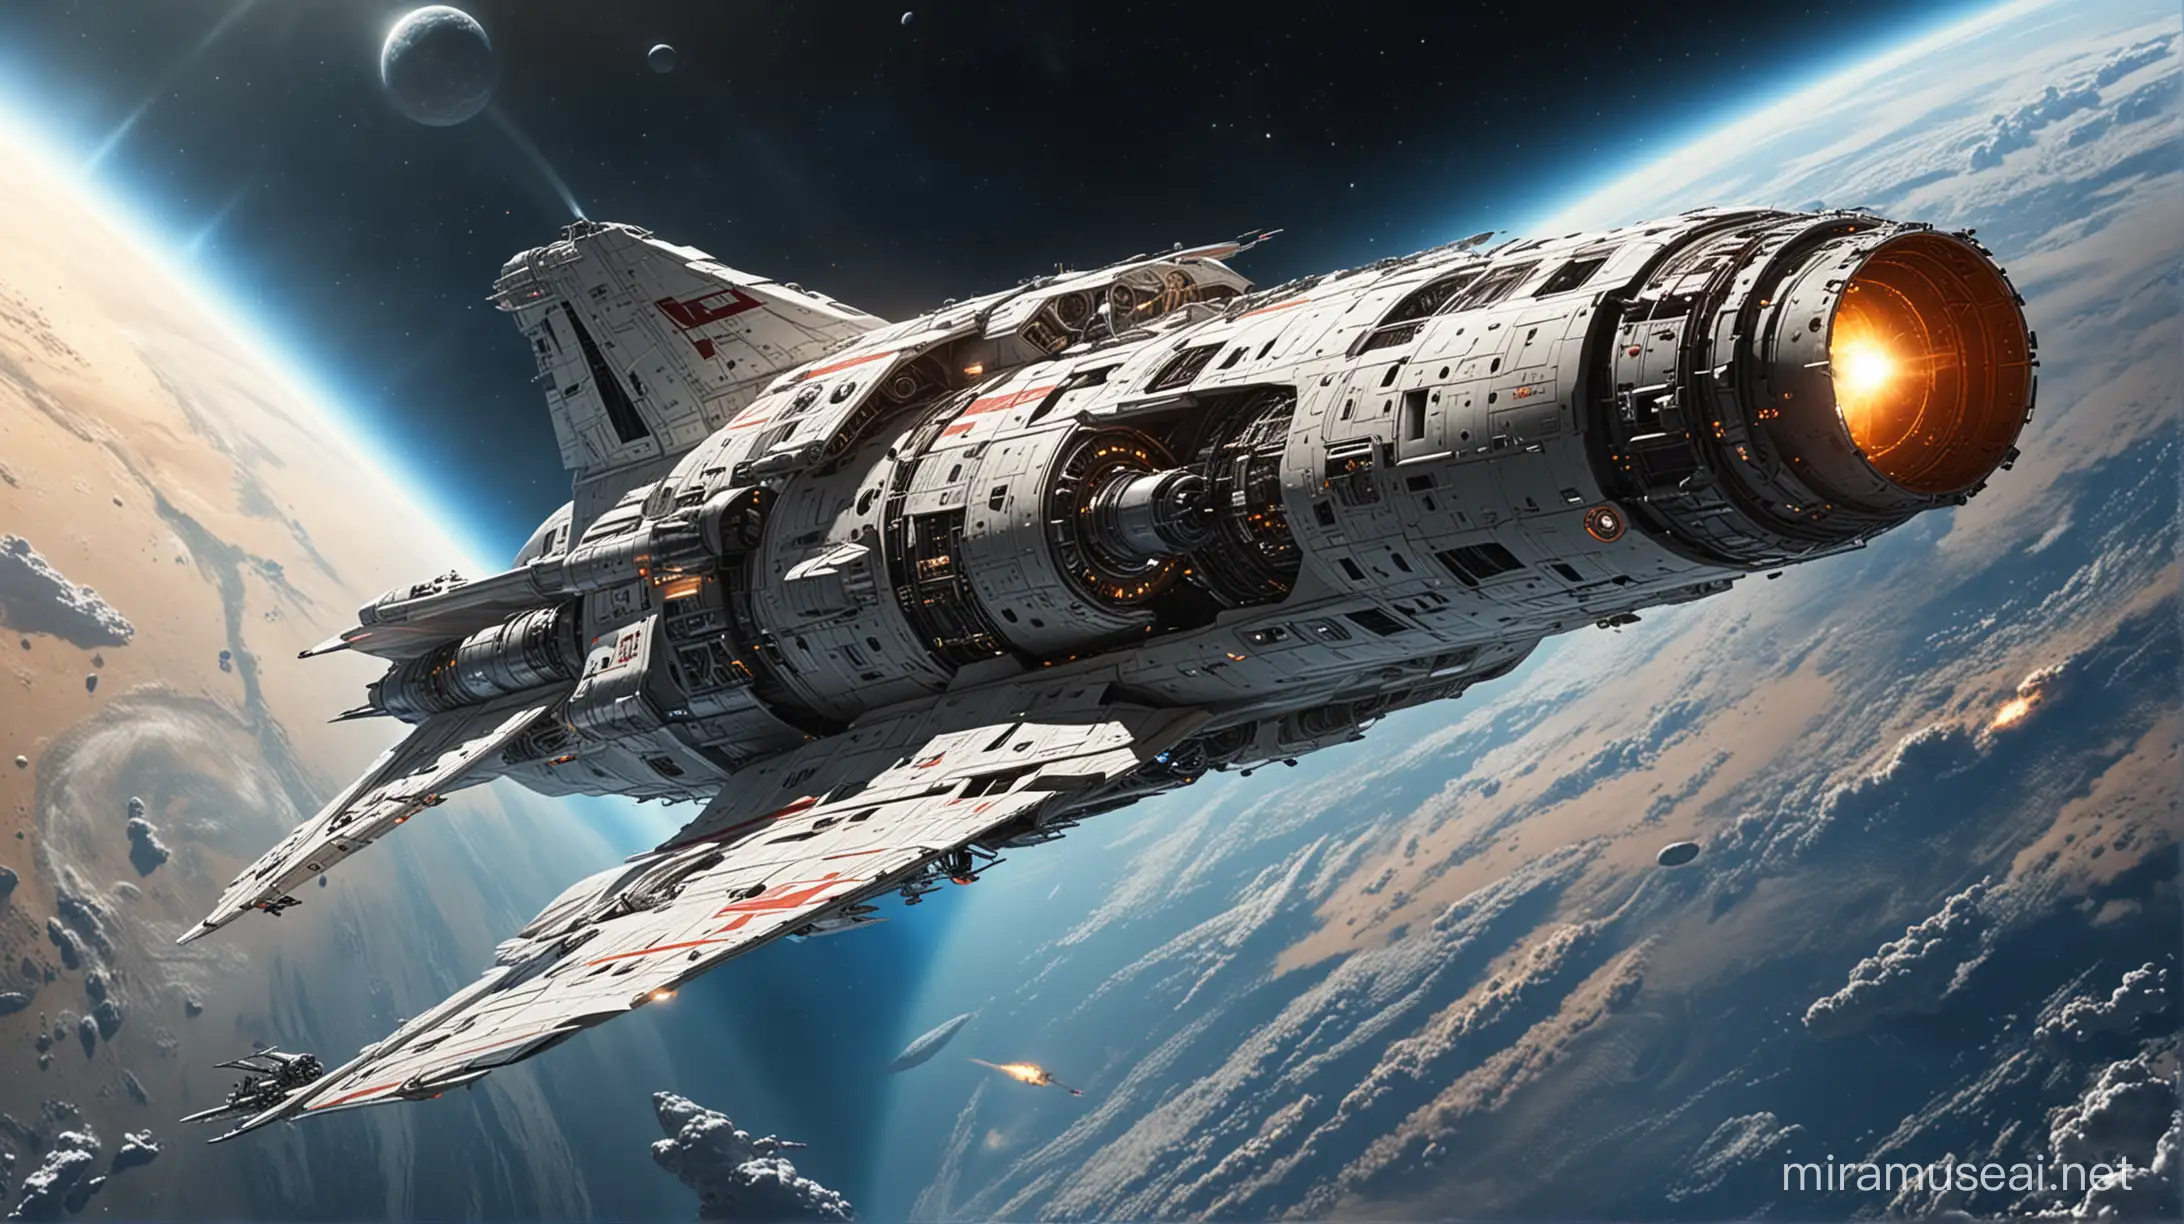 Russian space cruiser in earth orbit, science fiction, futurism